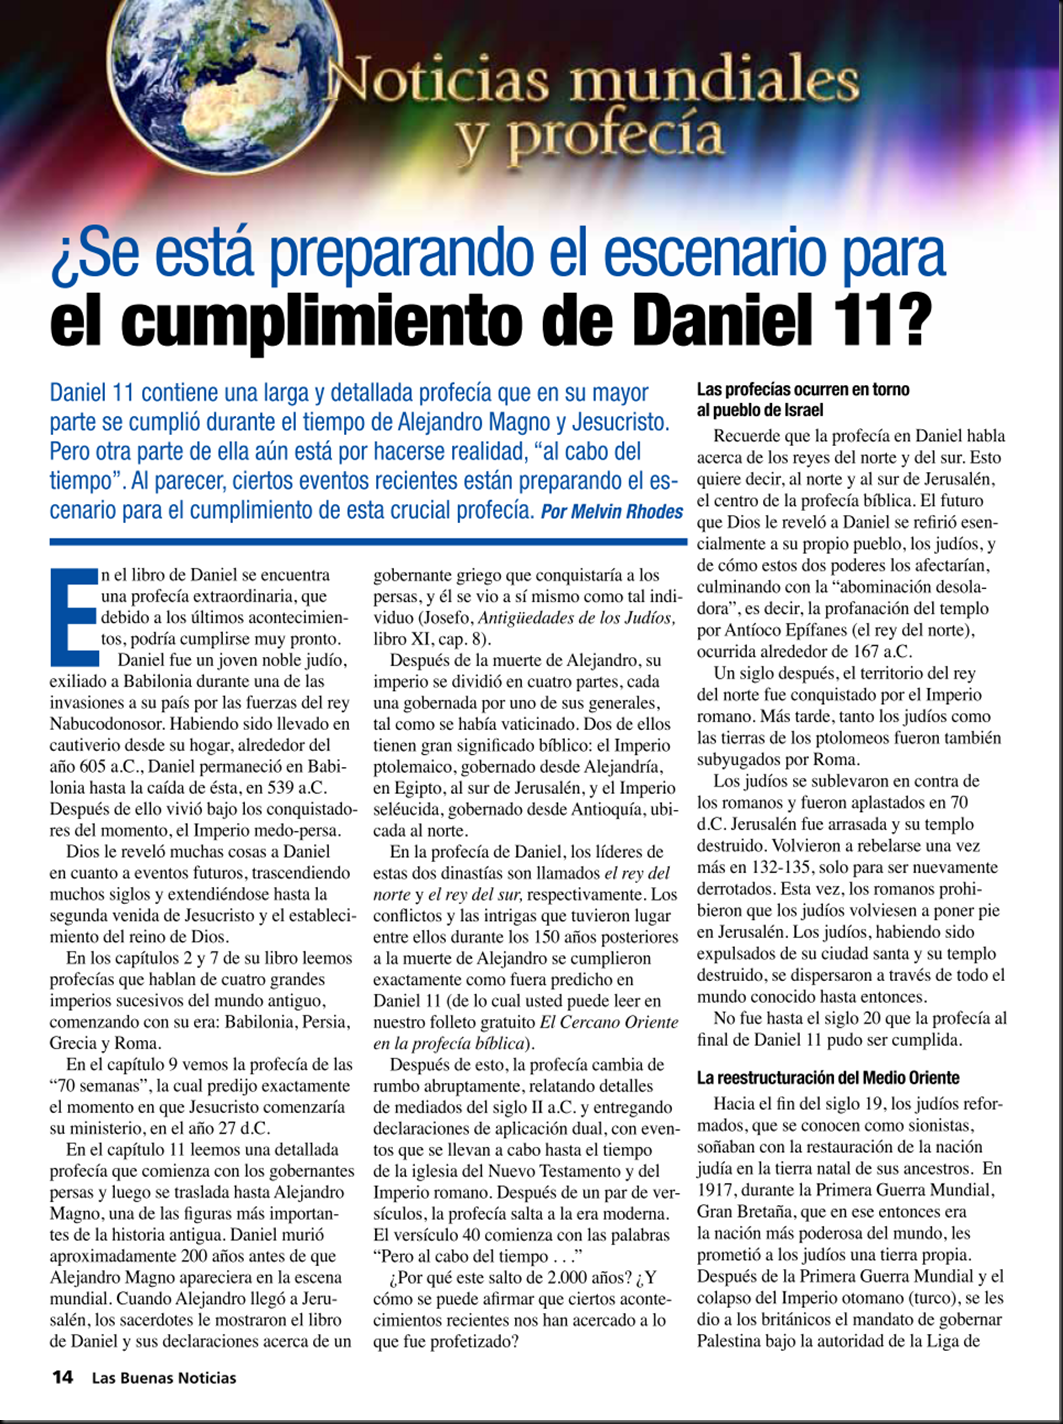 ¿Se está cumpliendo Daniel 11? Image_thumb7